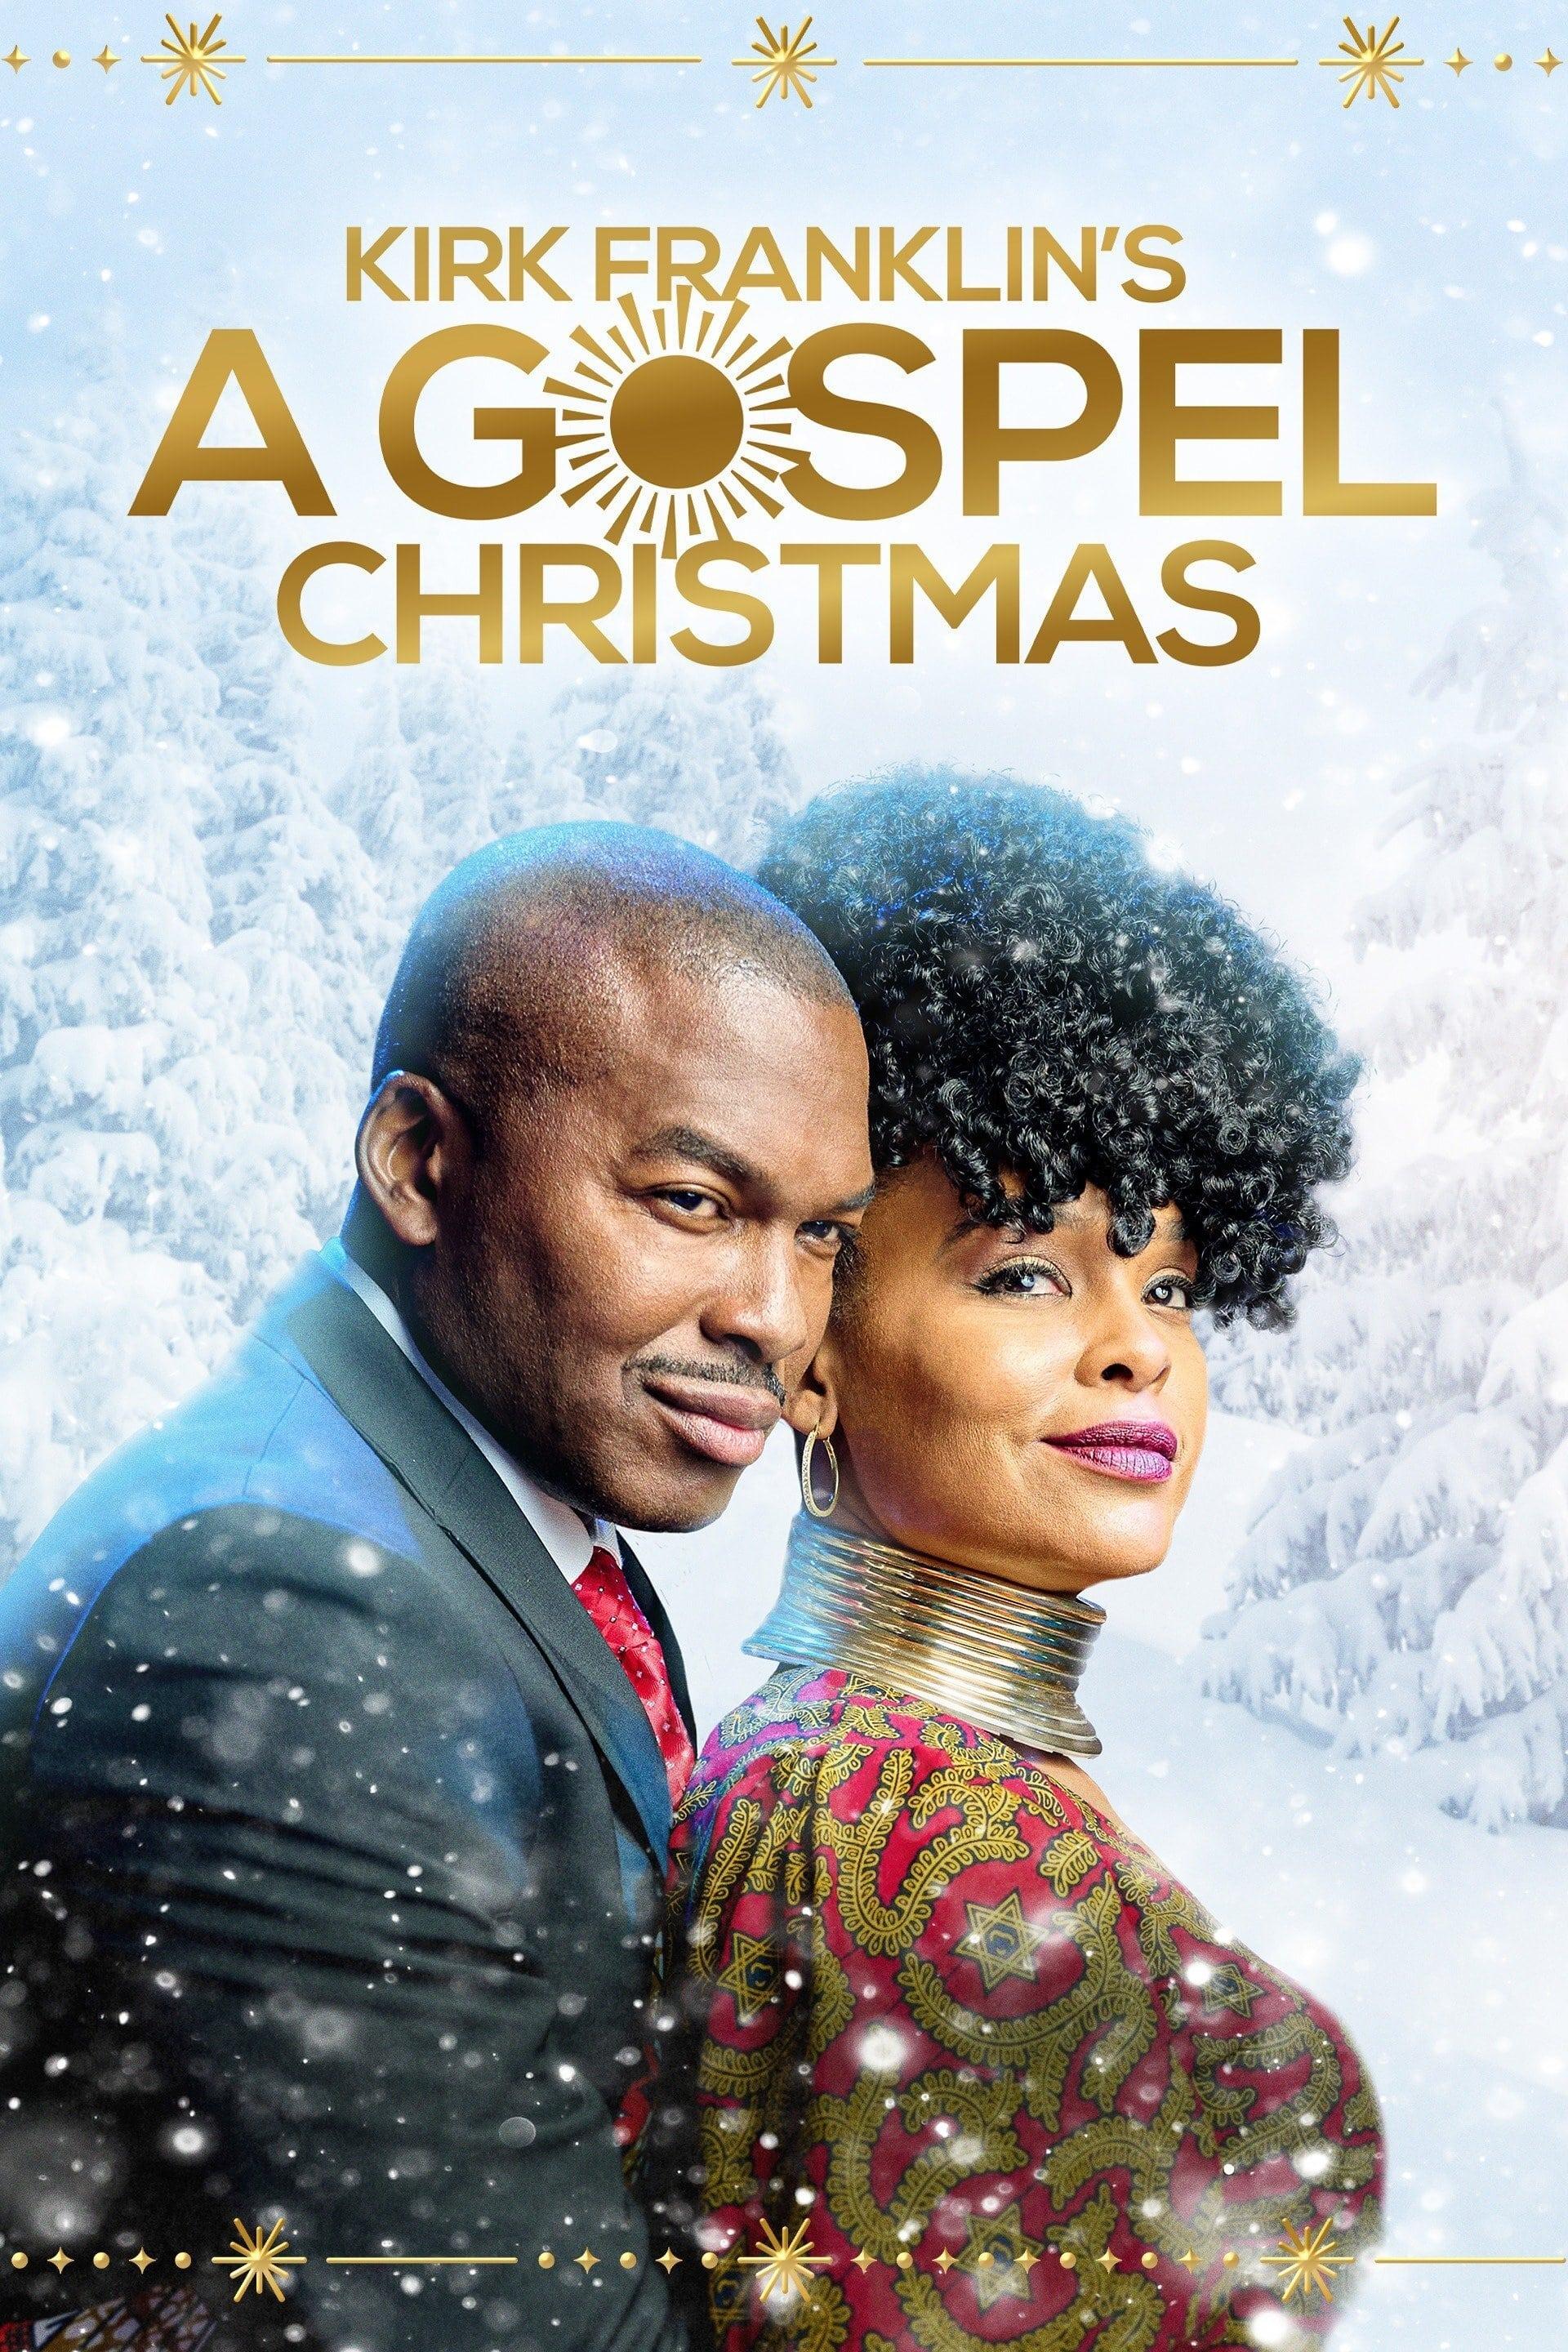 Kirk Franklin's A Gospel Christmas poster